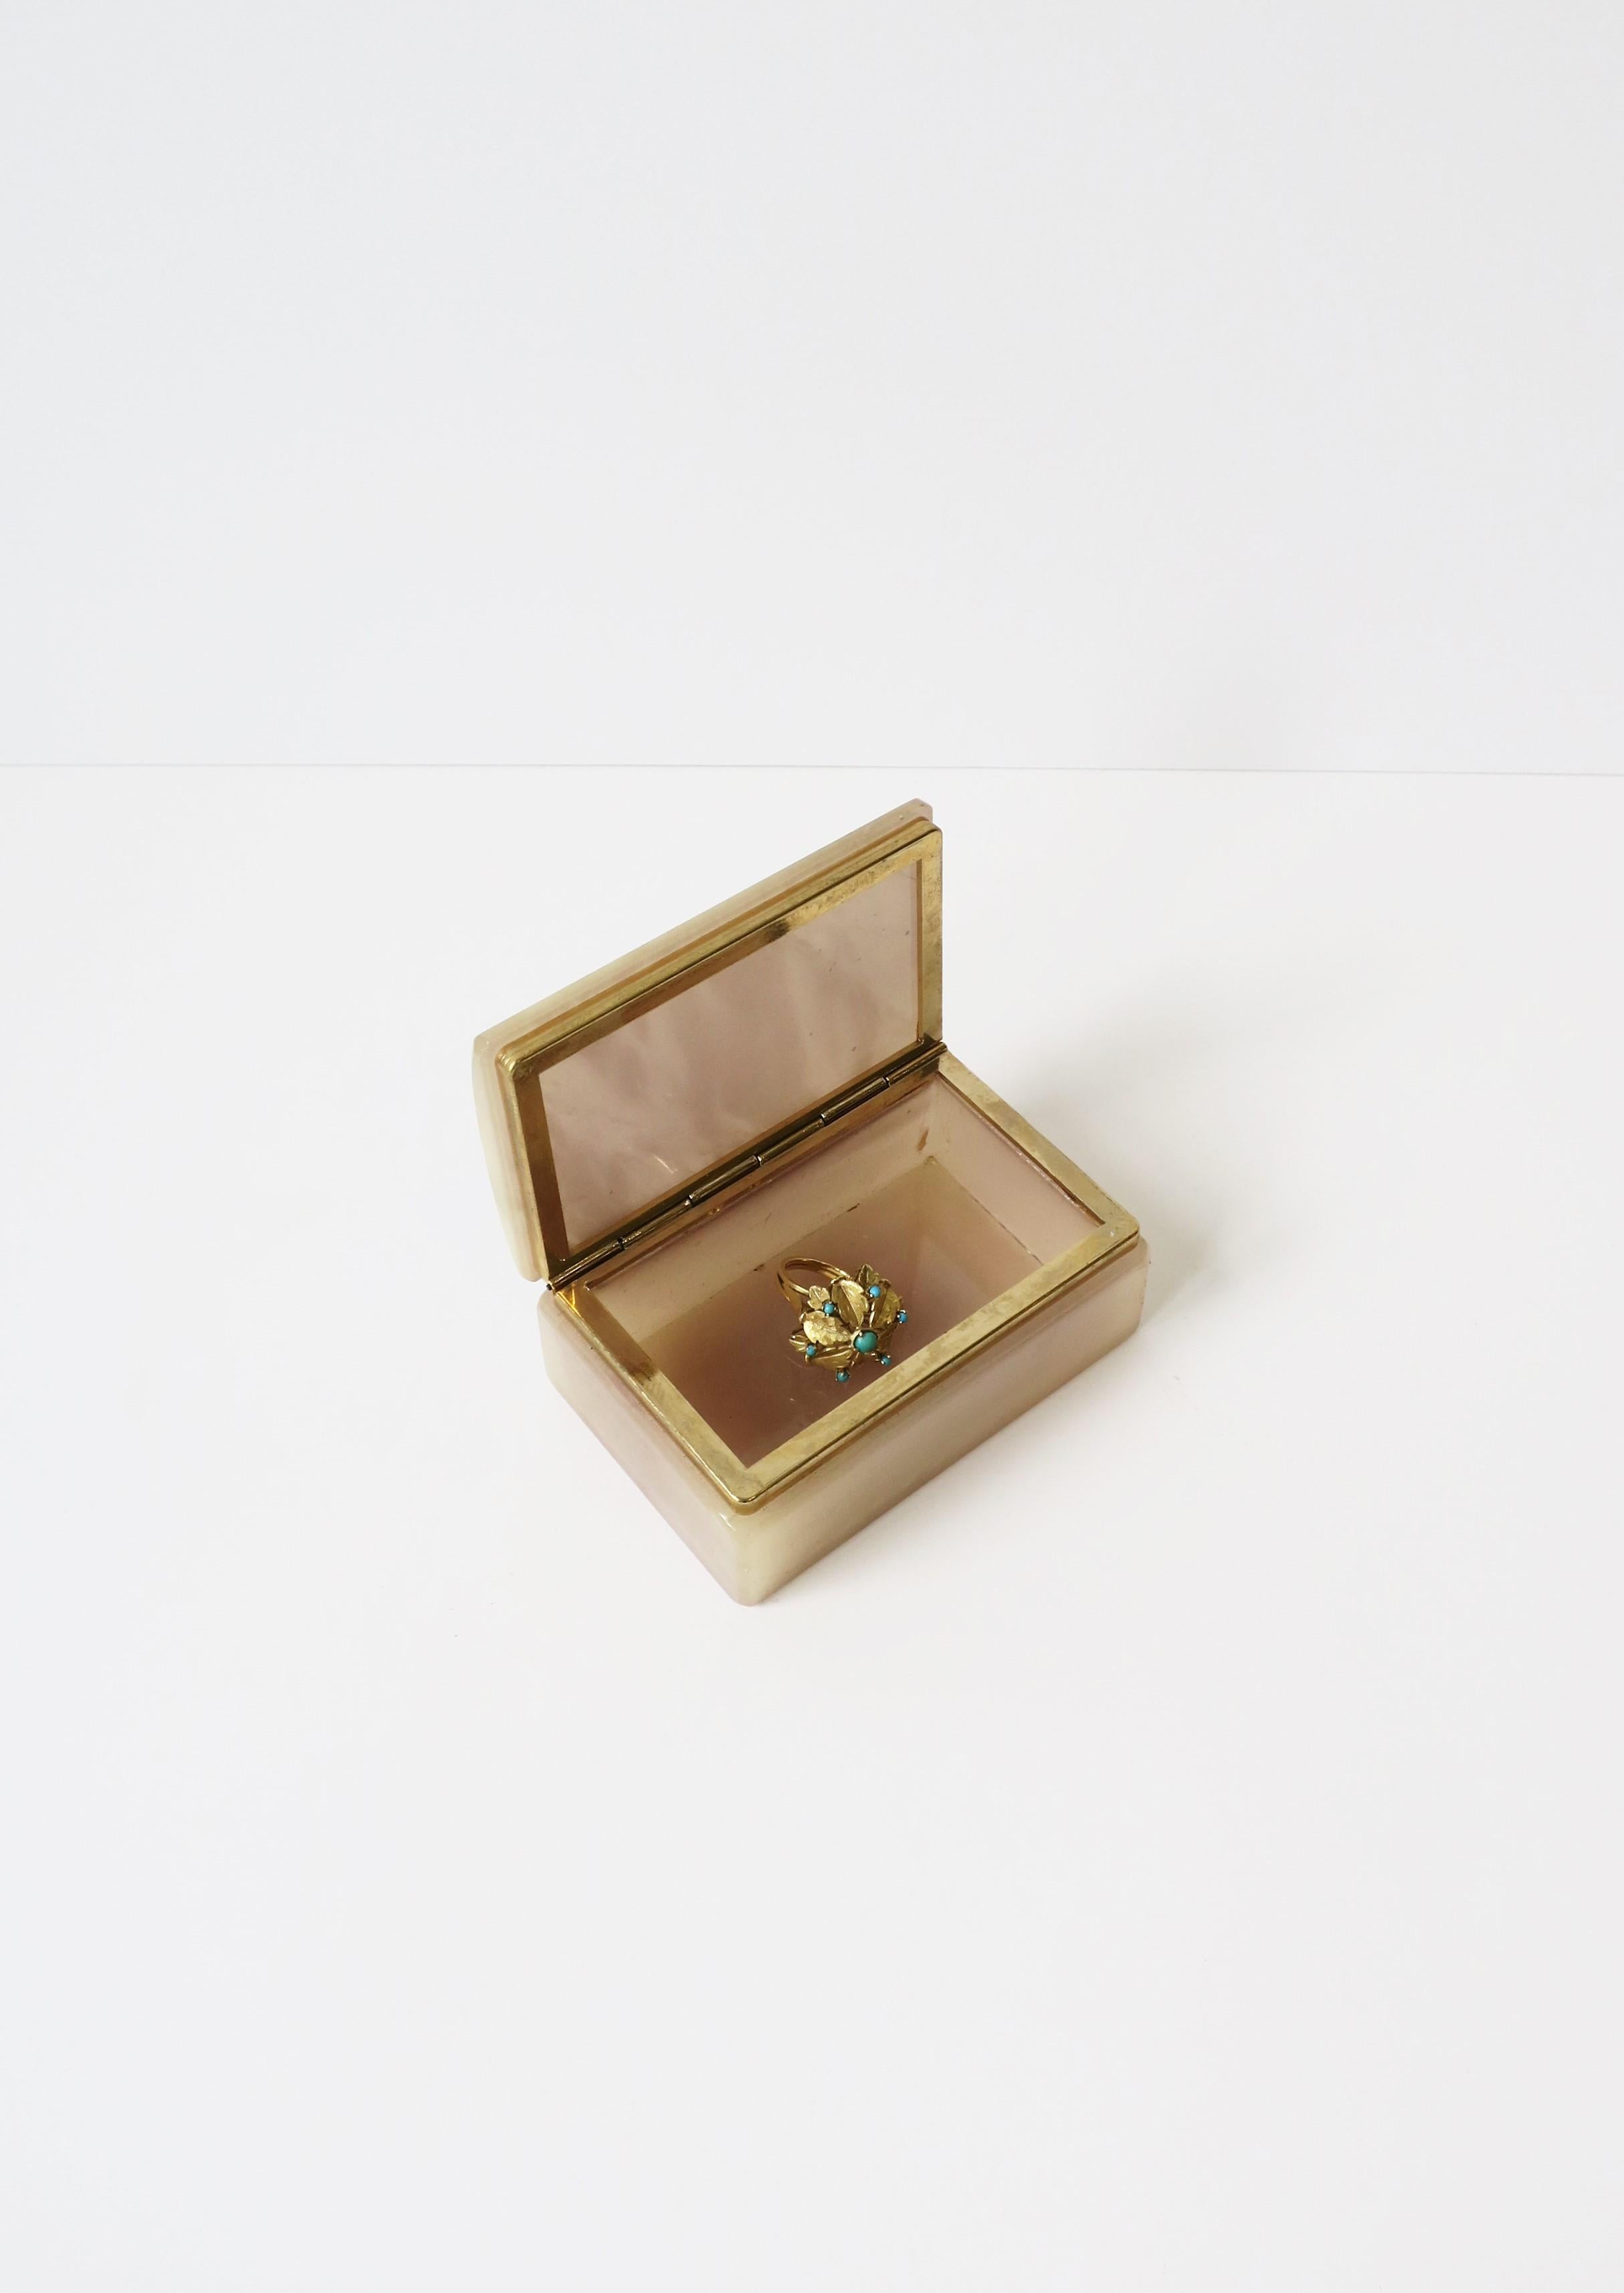 Onyx Marble Jewelry or Decorative Box 2